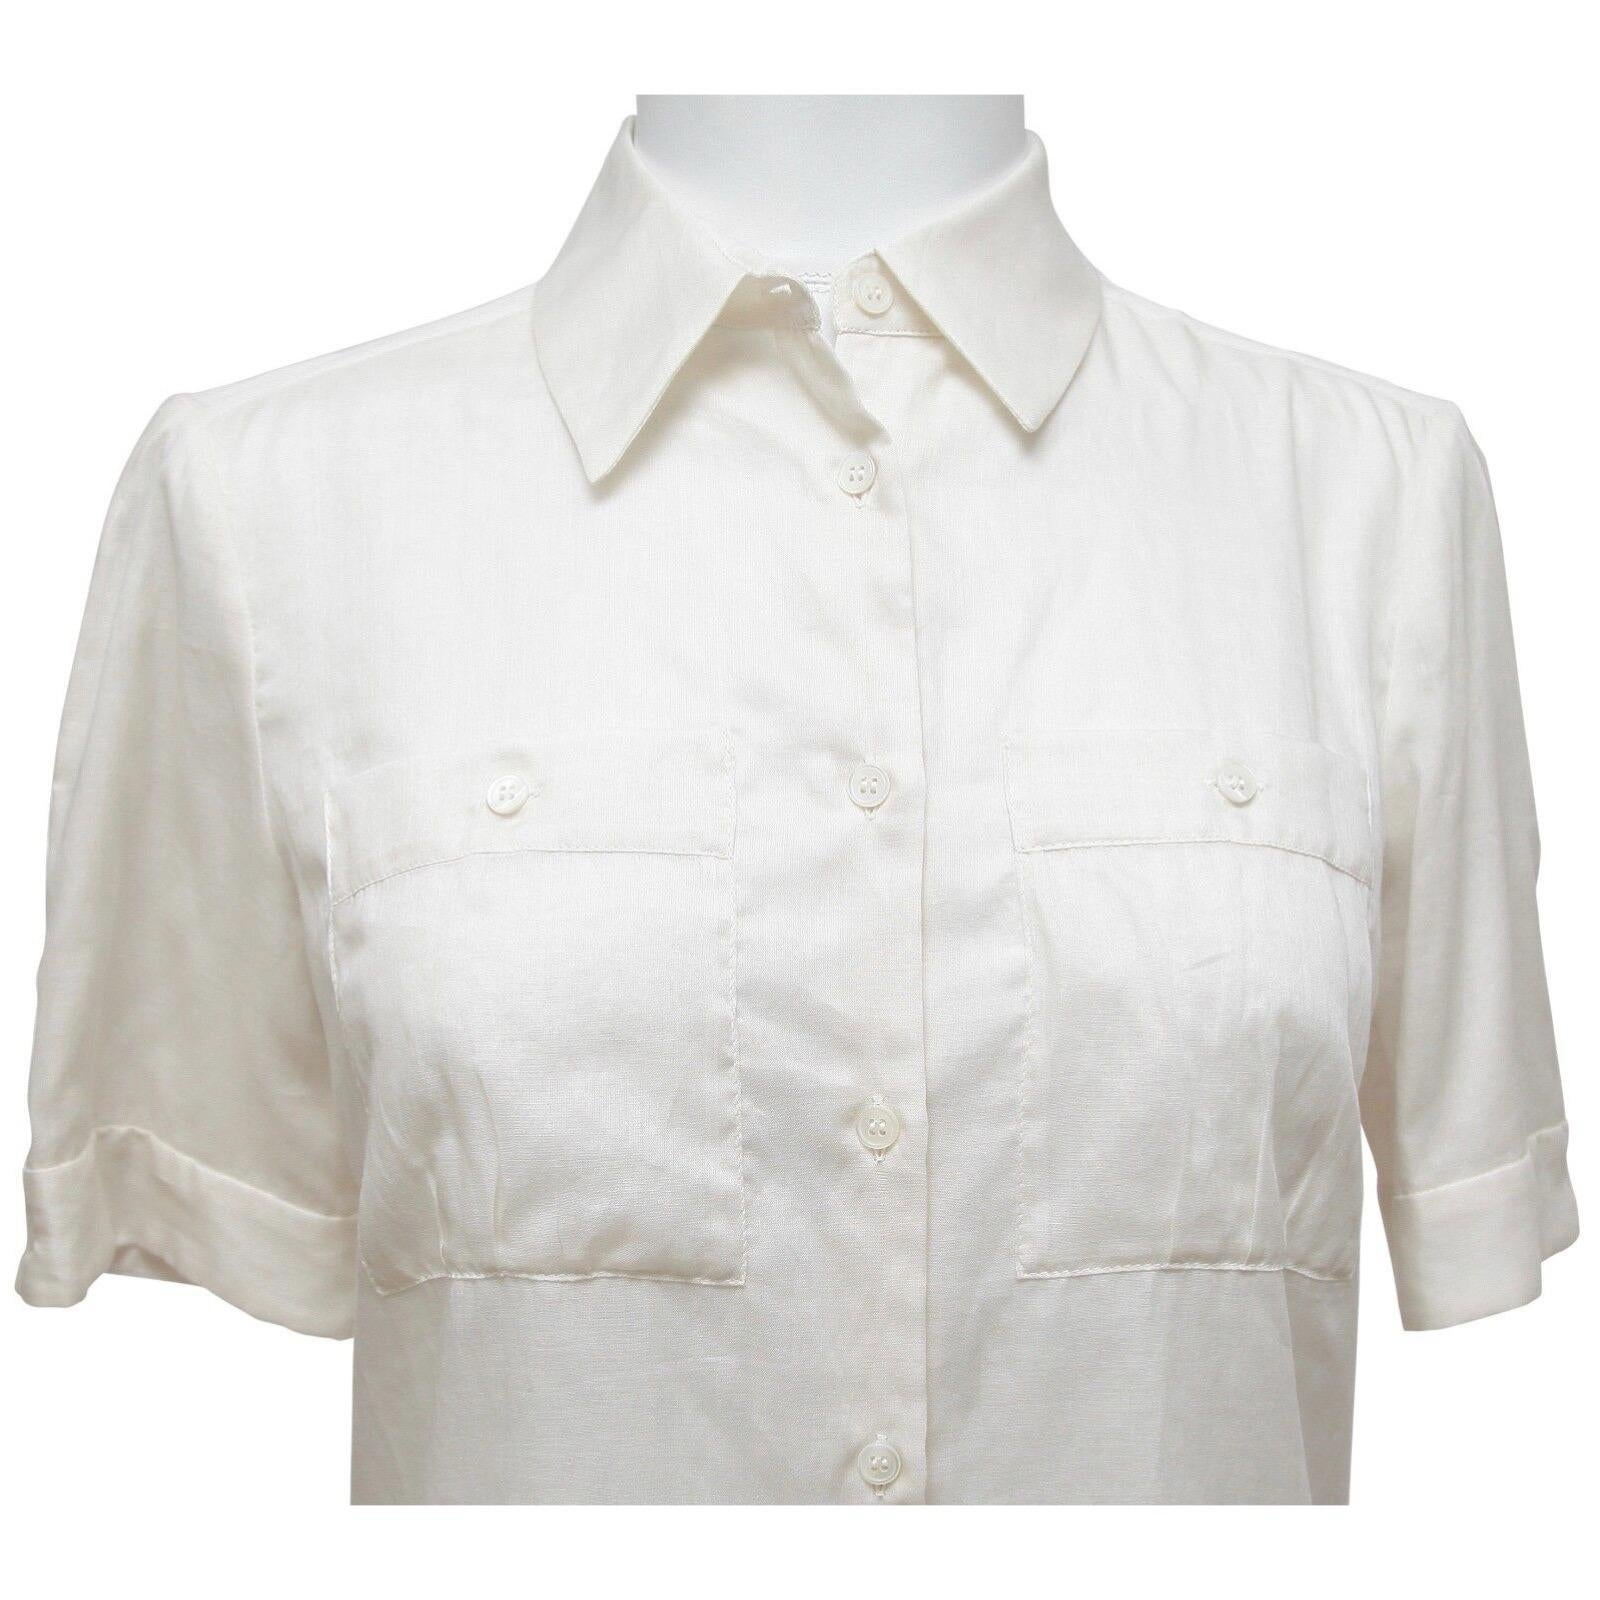 Gray MIU MIU Blouse Shirt Top Button Down Cotton Ivory Short Sleeve Sz 42 For Sale